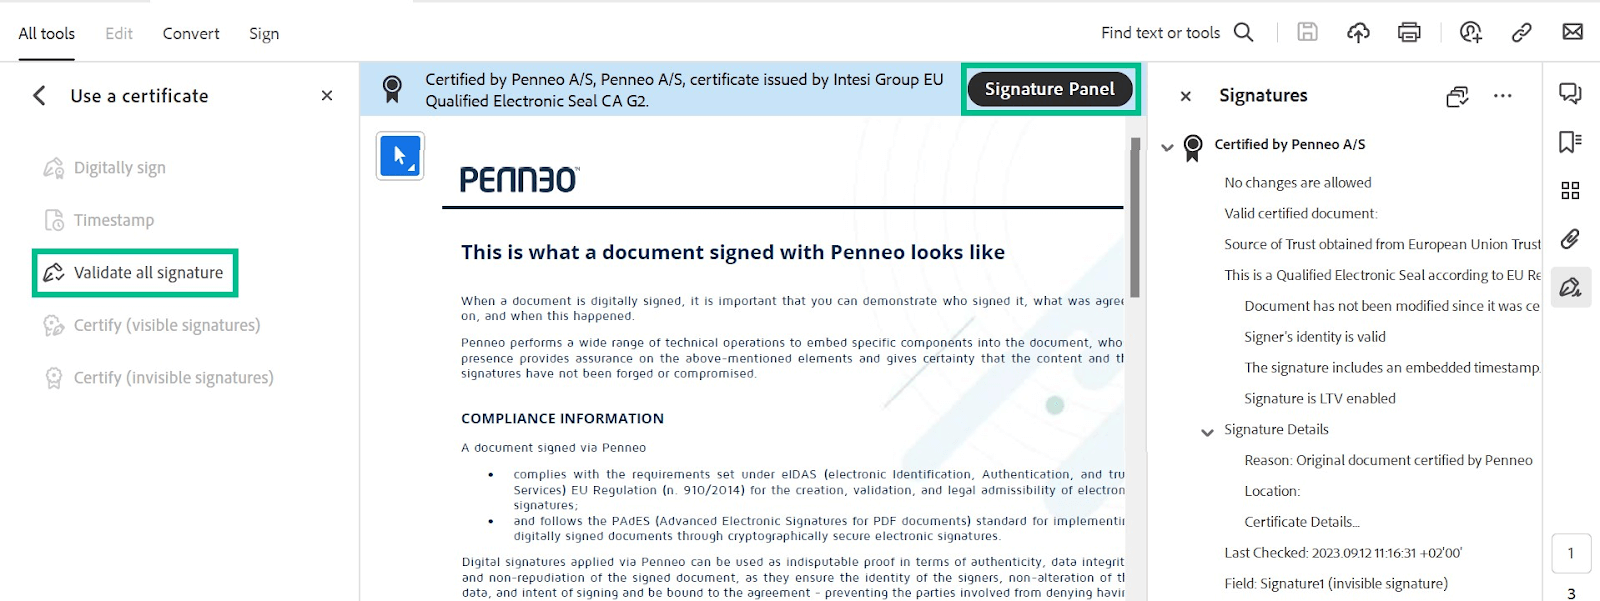 Verifying digital signatures - Penneo